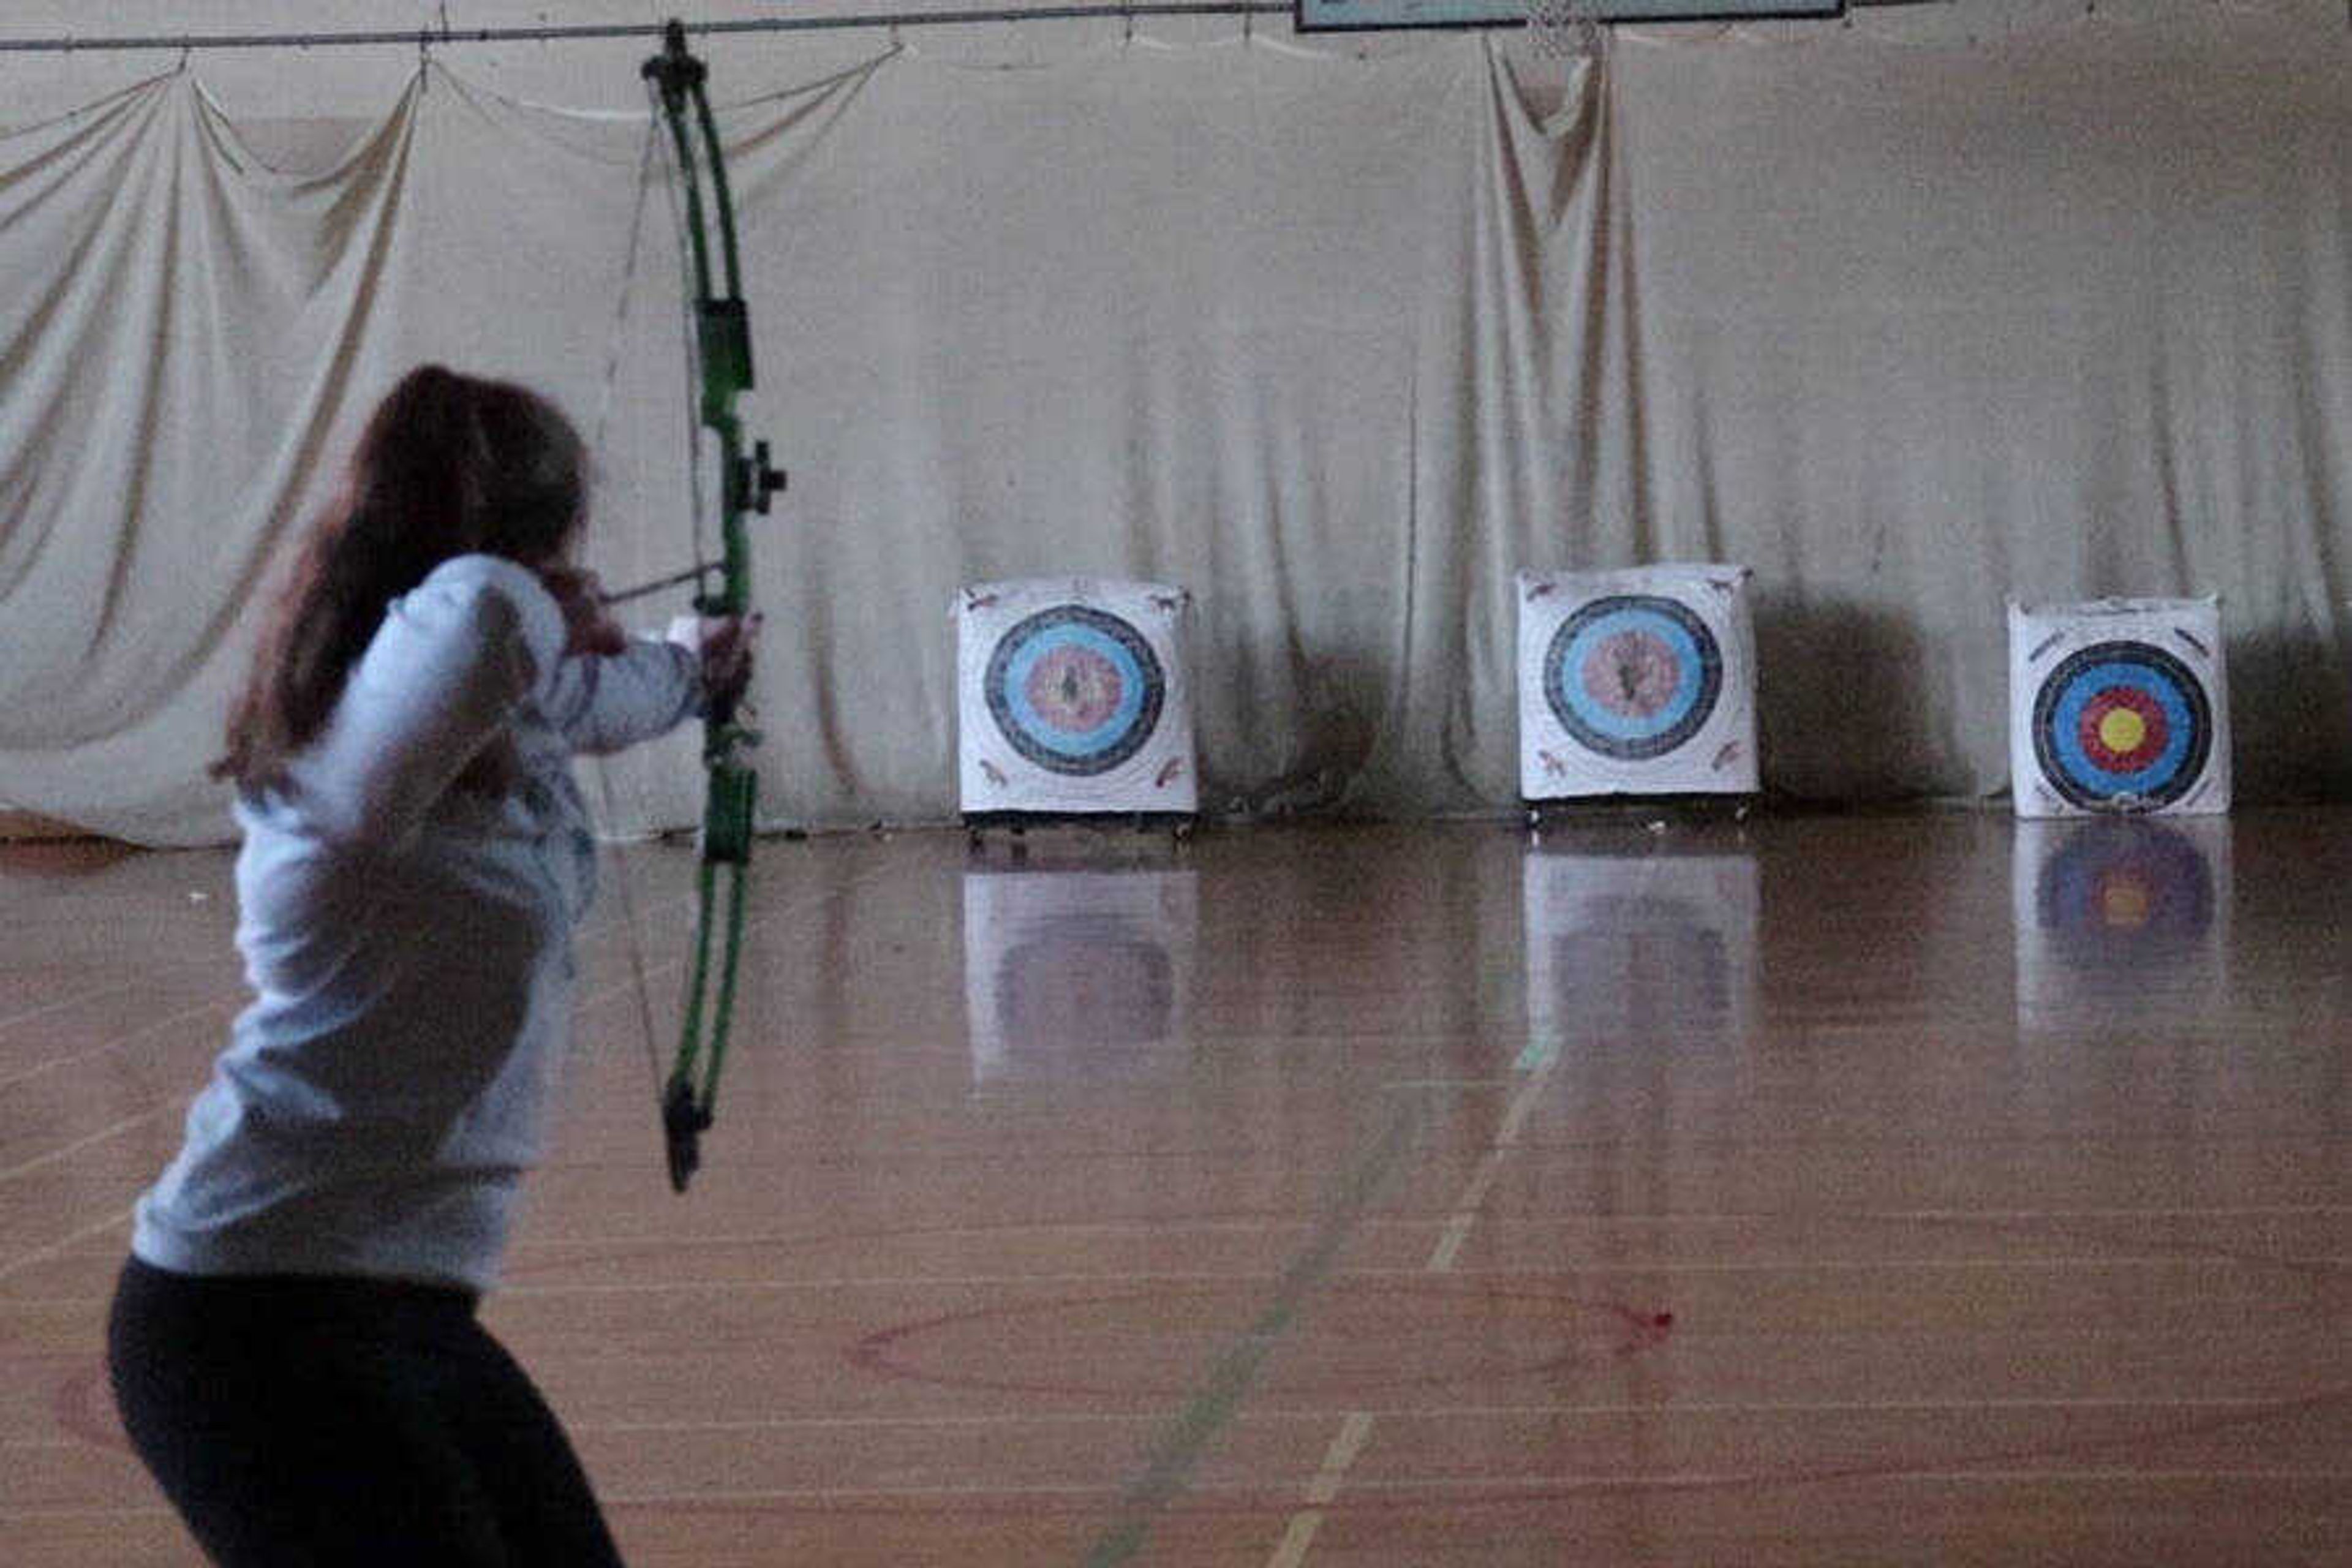 SEMO’s archery club back to flinging arrows